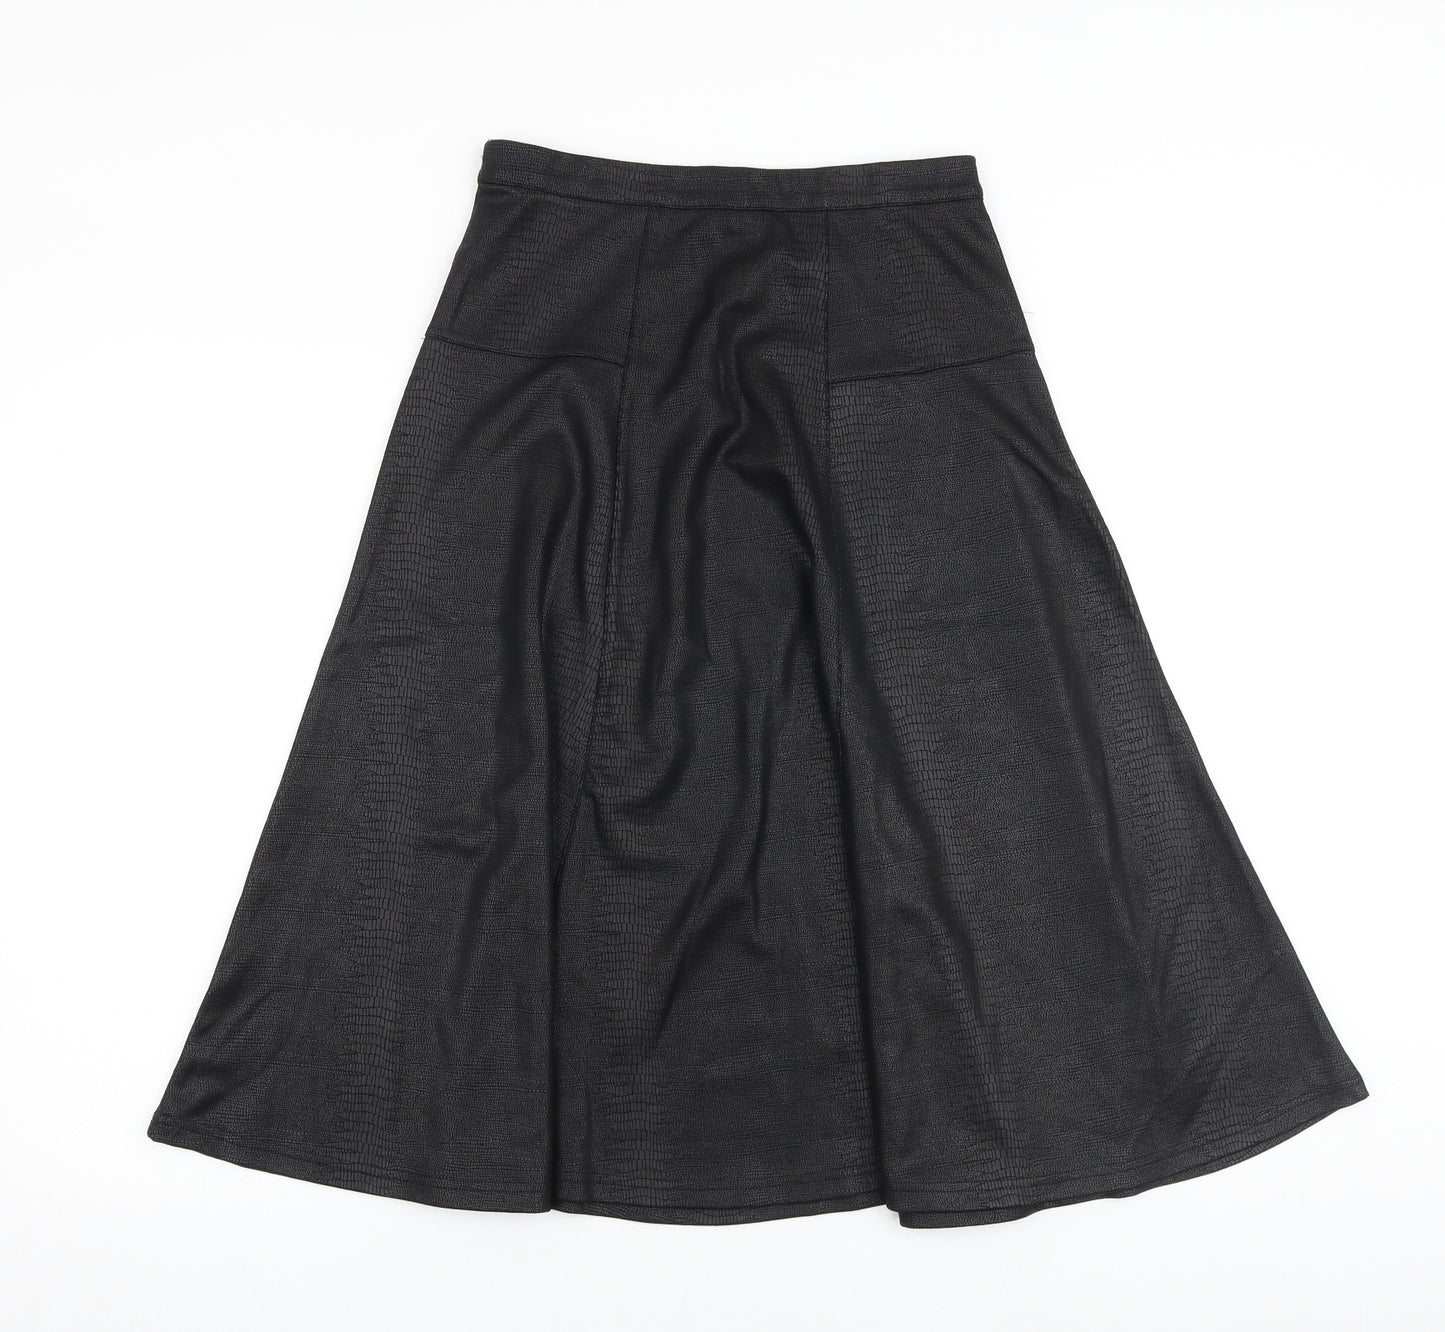 Damart Womens Black Animal Print Polyester Swing Skirt Size 10 - Croc texture